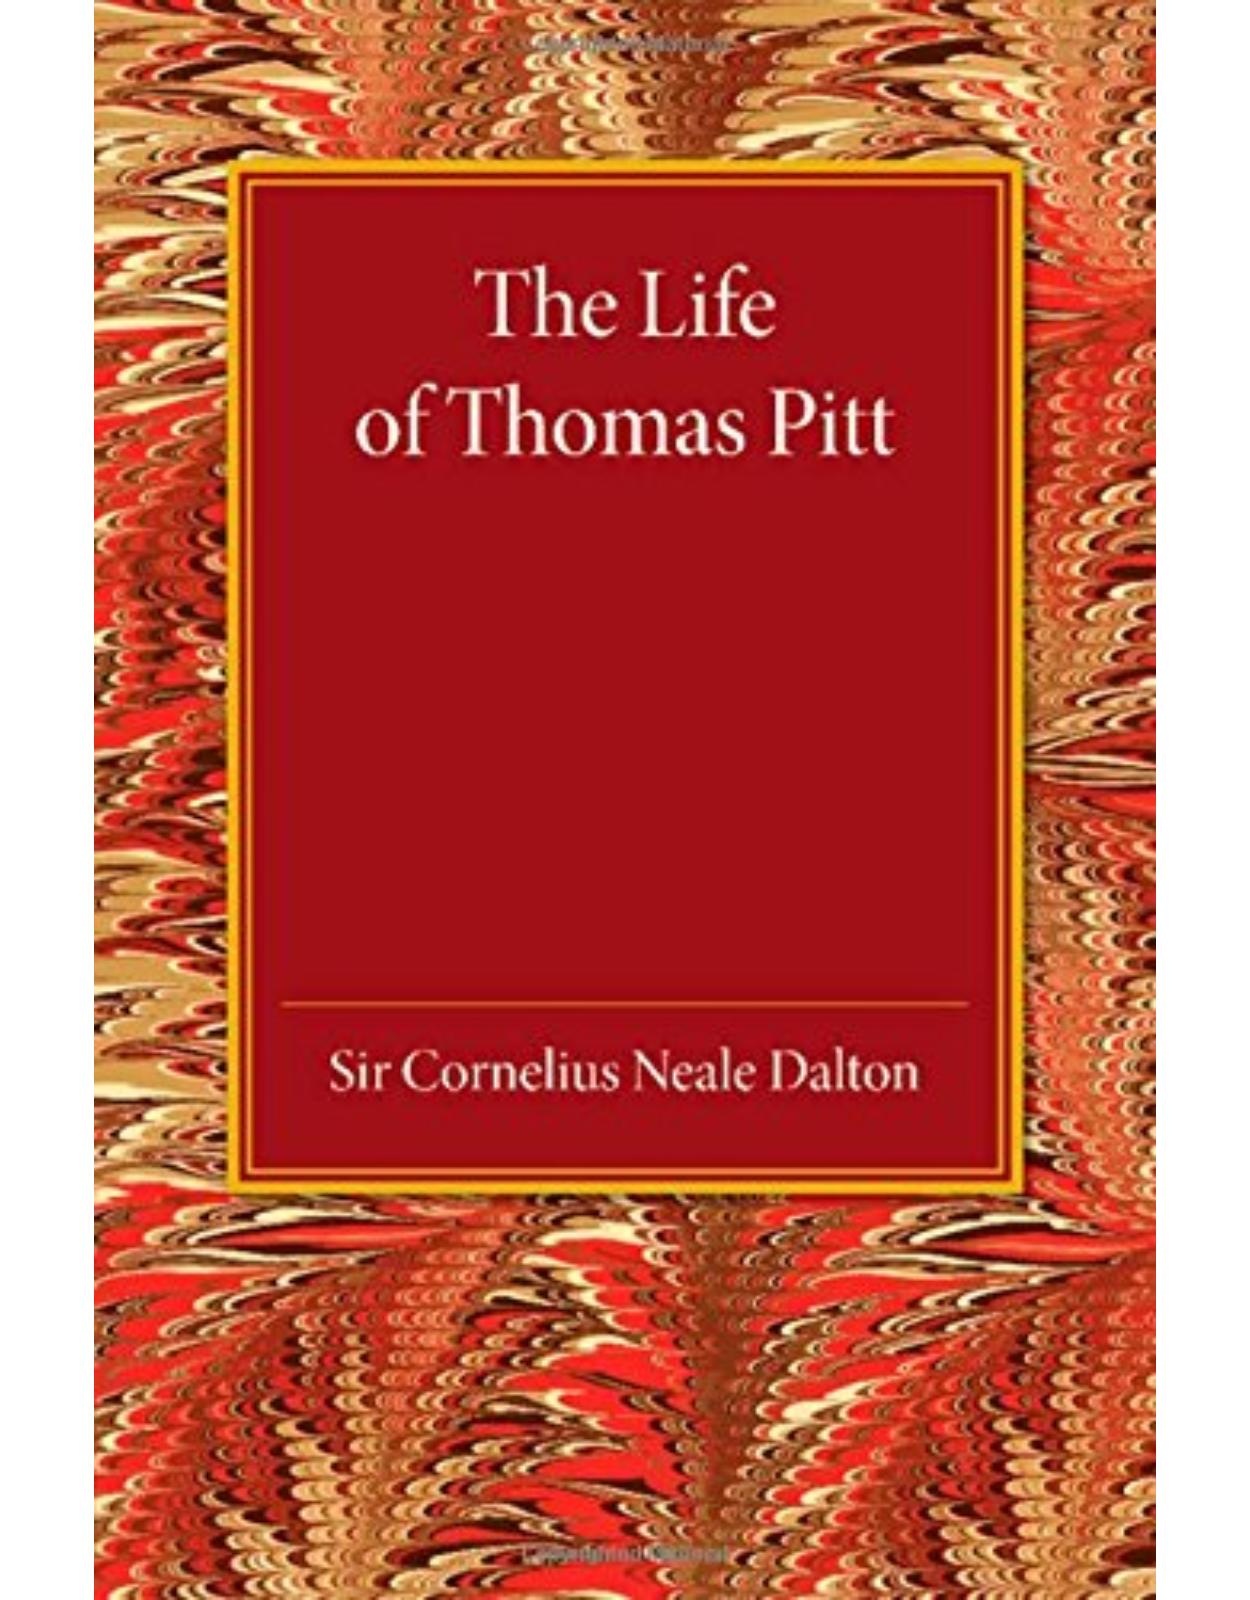 The Life of Thomas Pitt